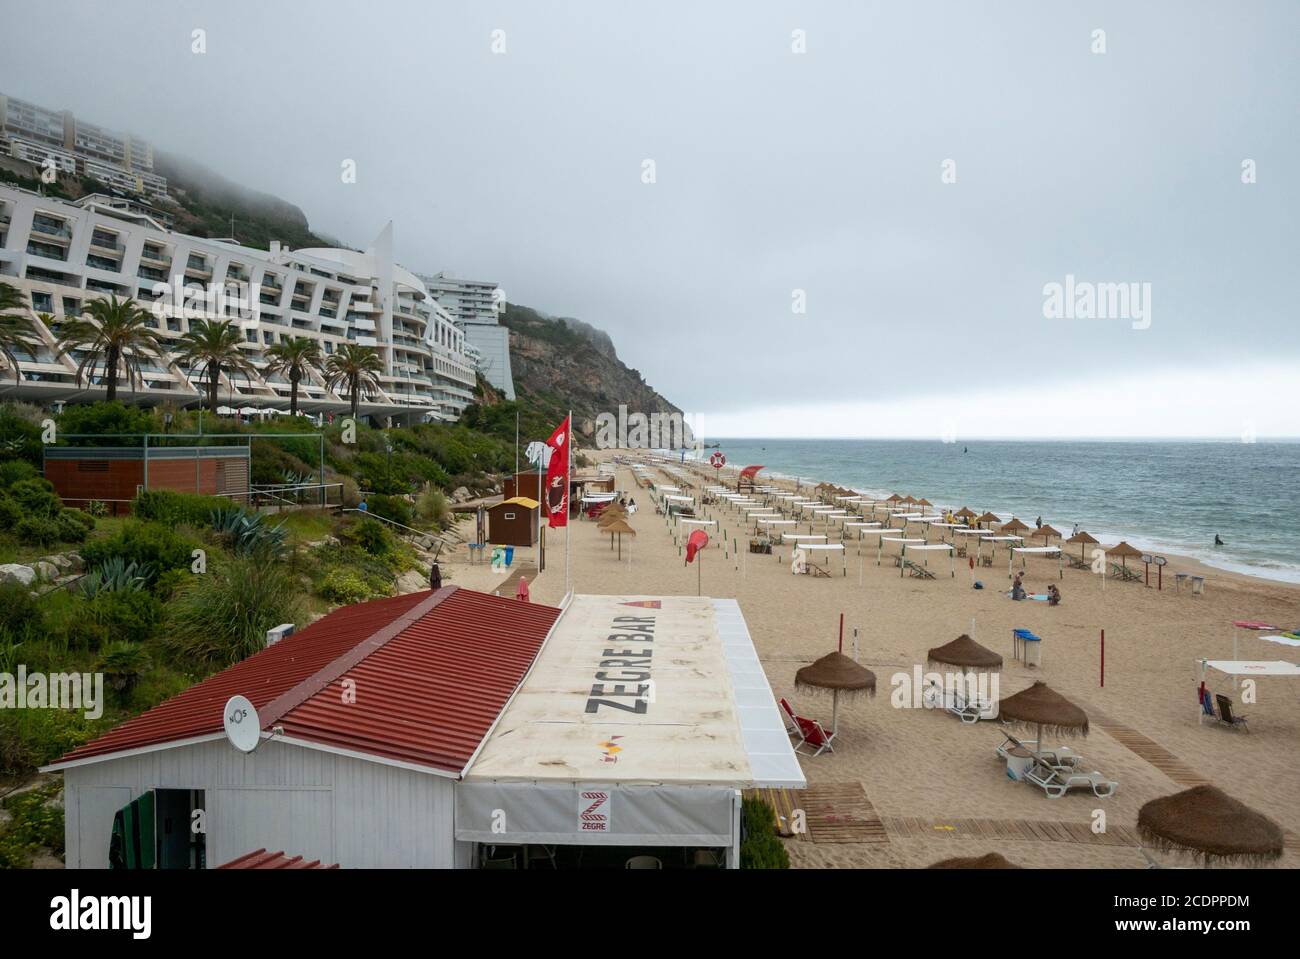 Beach California at Sesimbra, Portugal, Europe Stock Photo